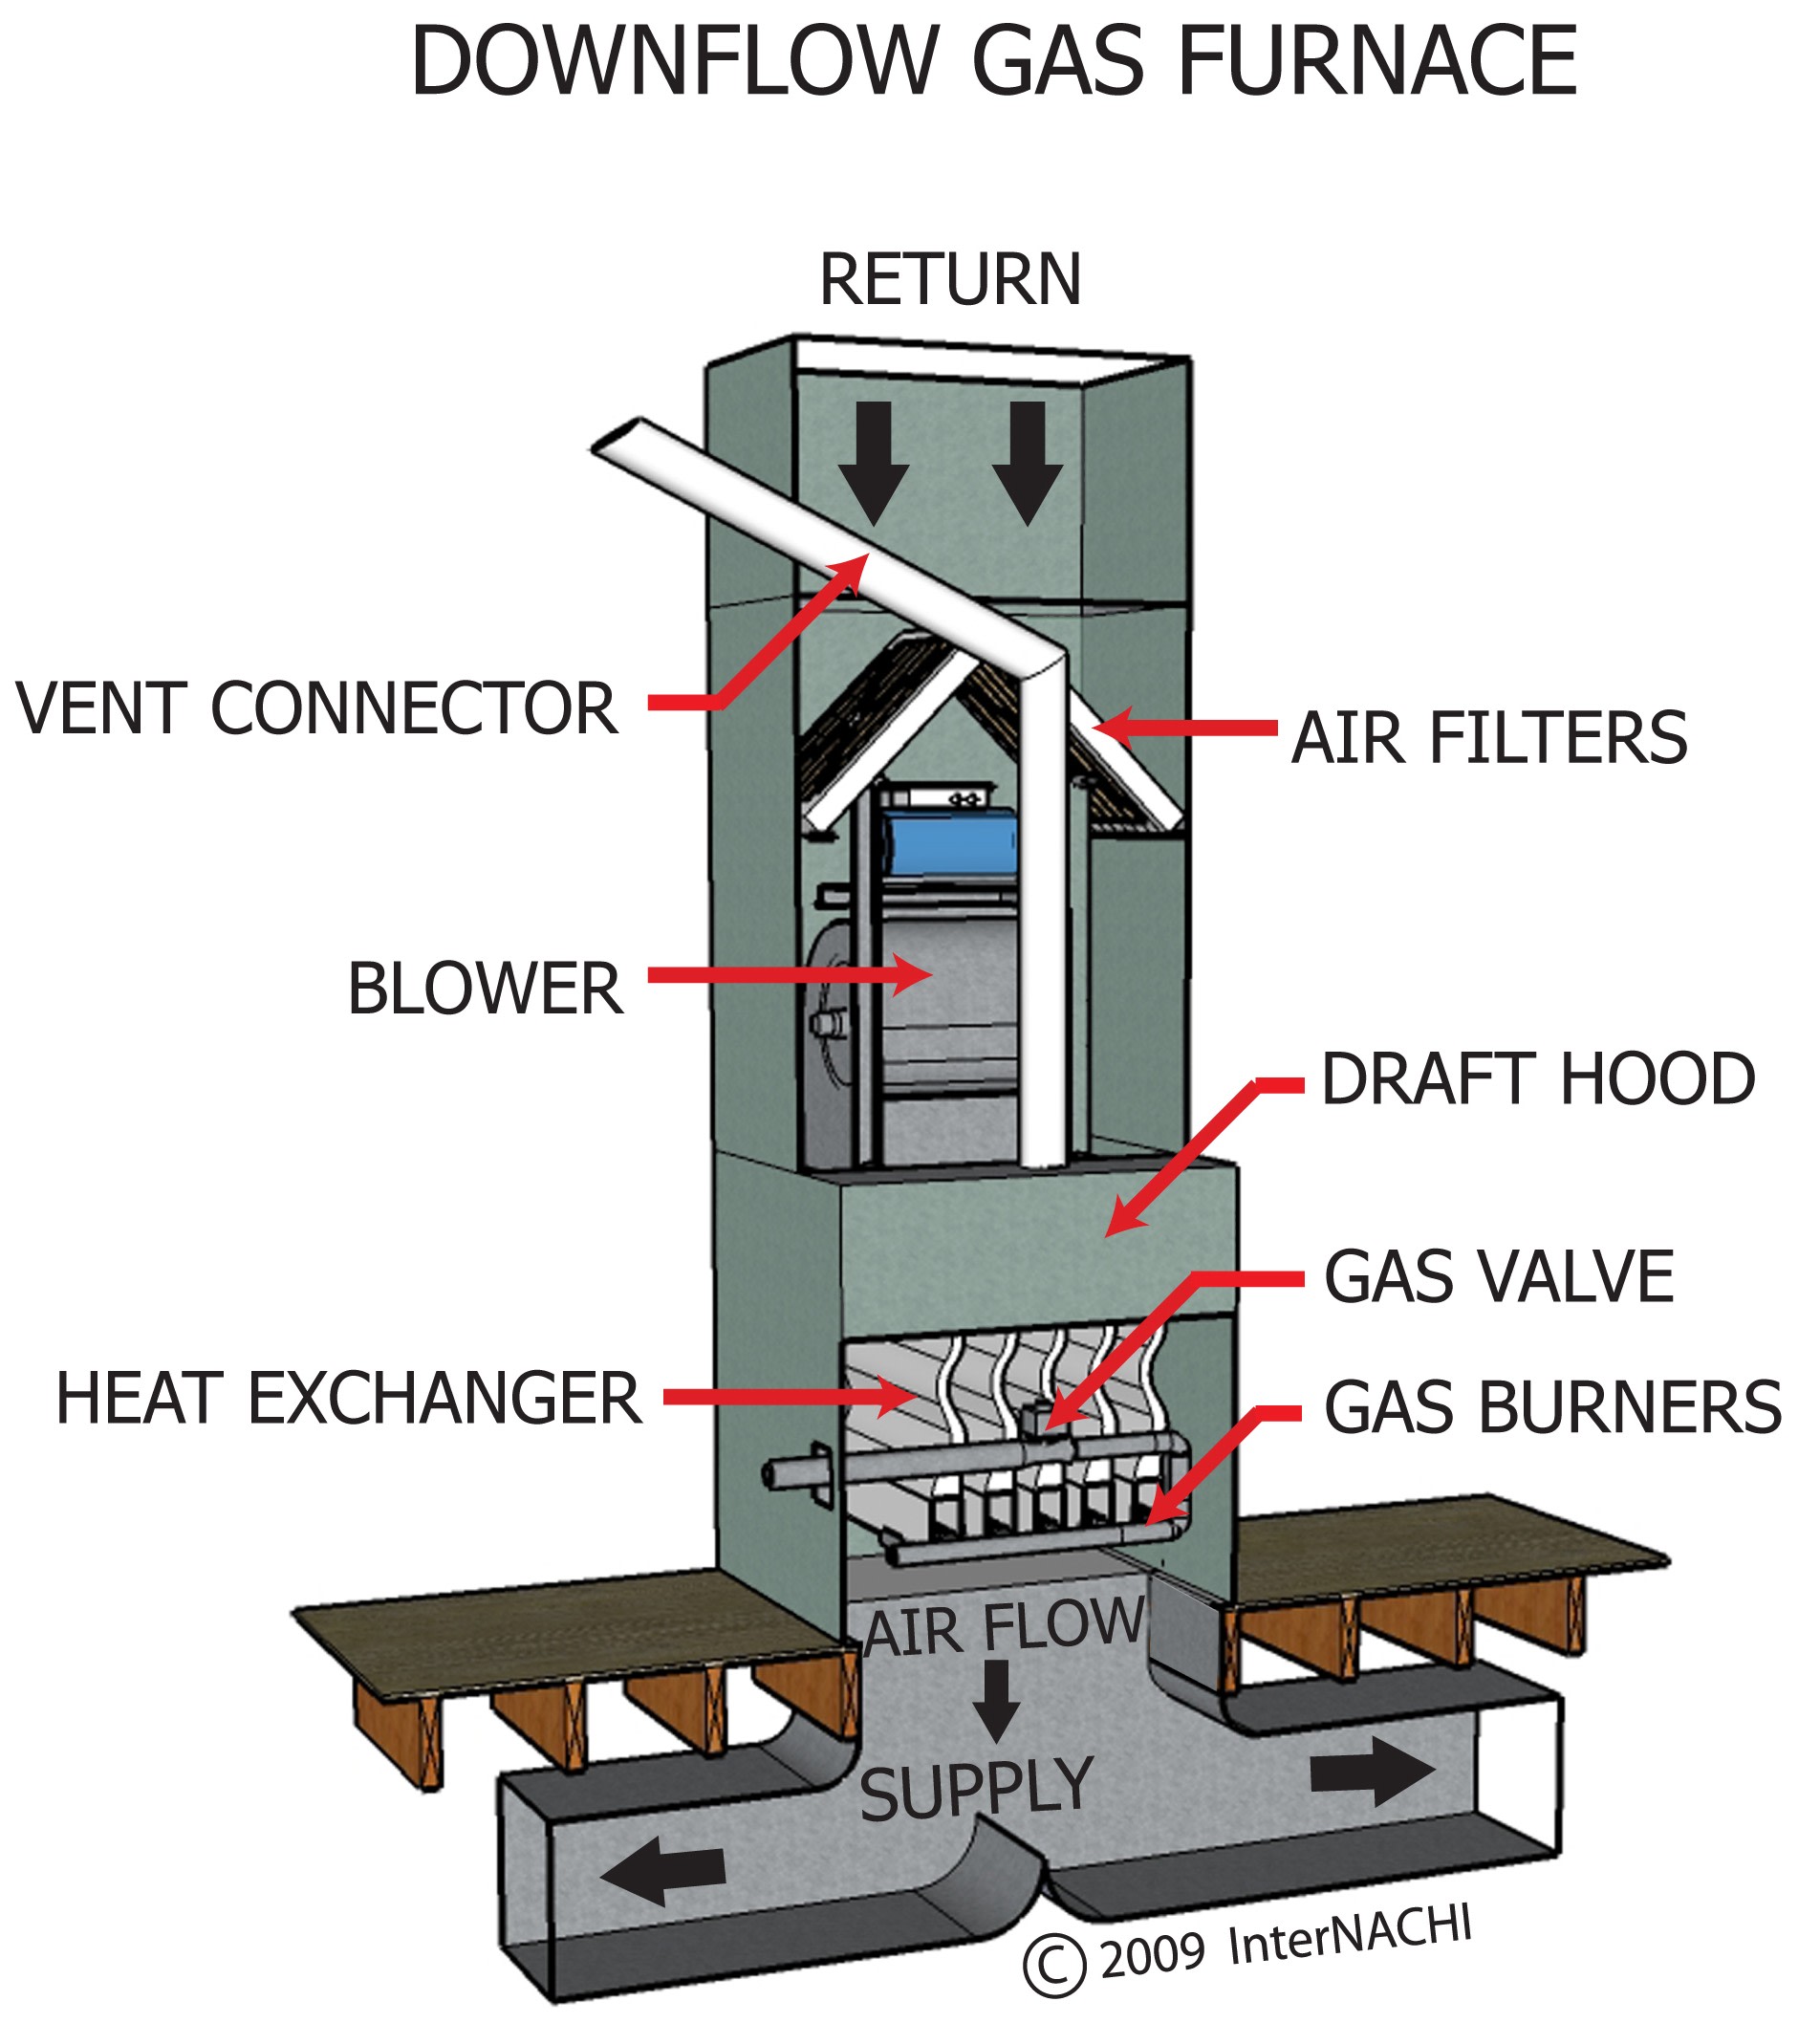 Downflow gas furnace. - Inspection Gallery - InterNACHI®